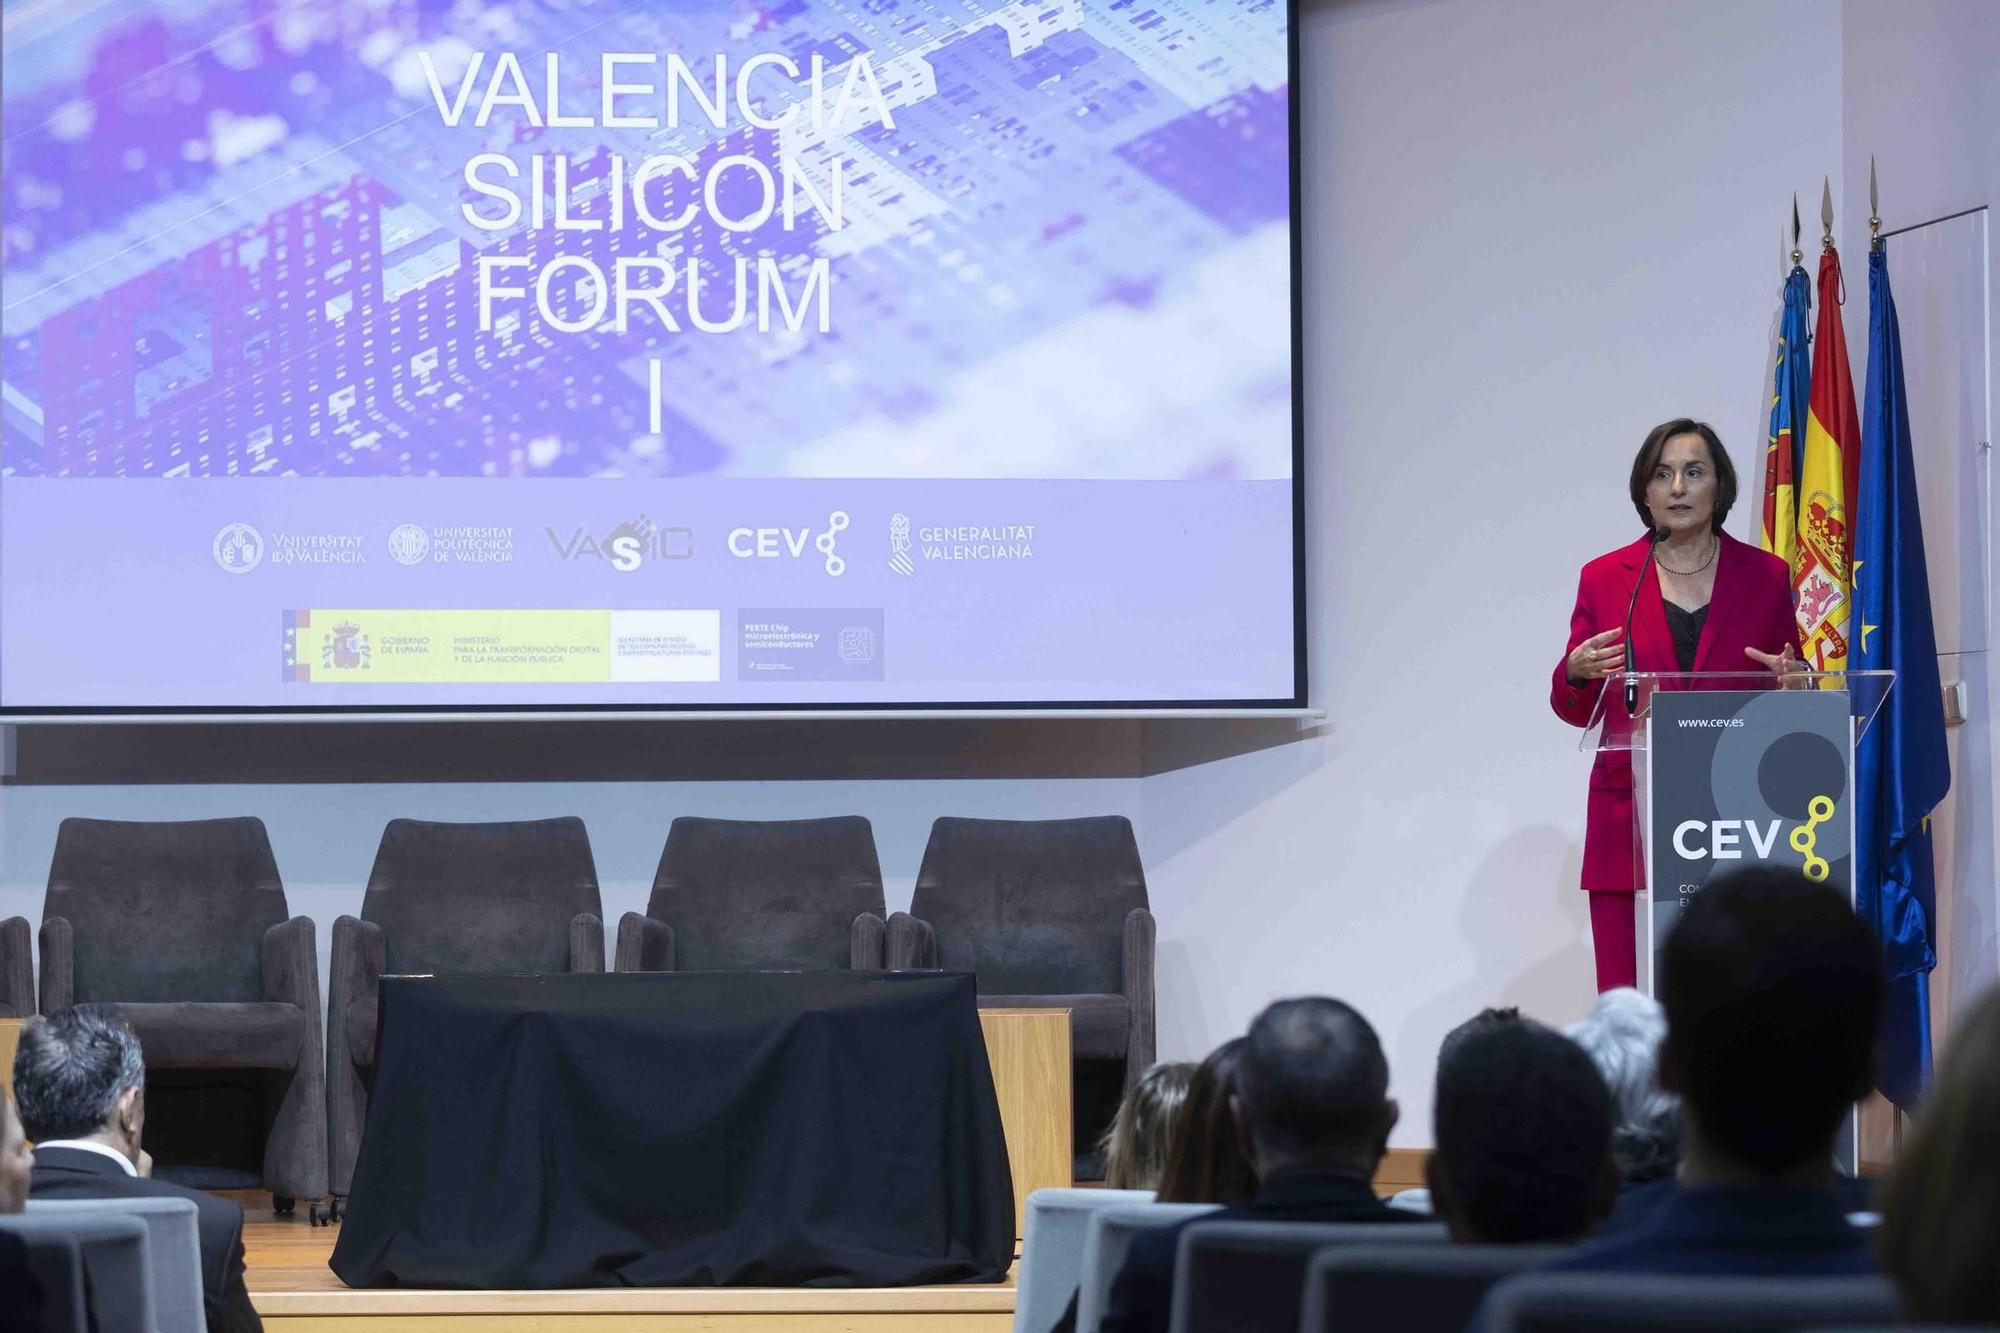 Valencia Silicon Forum